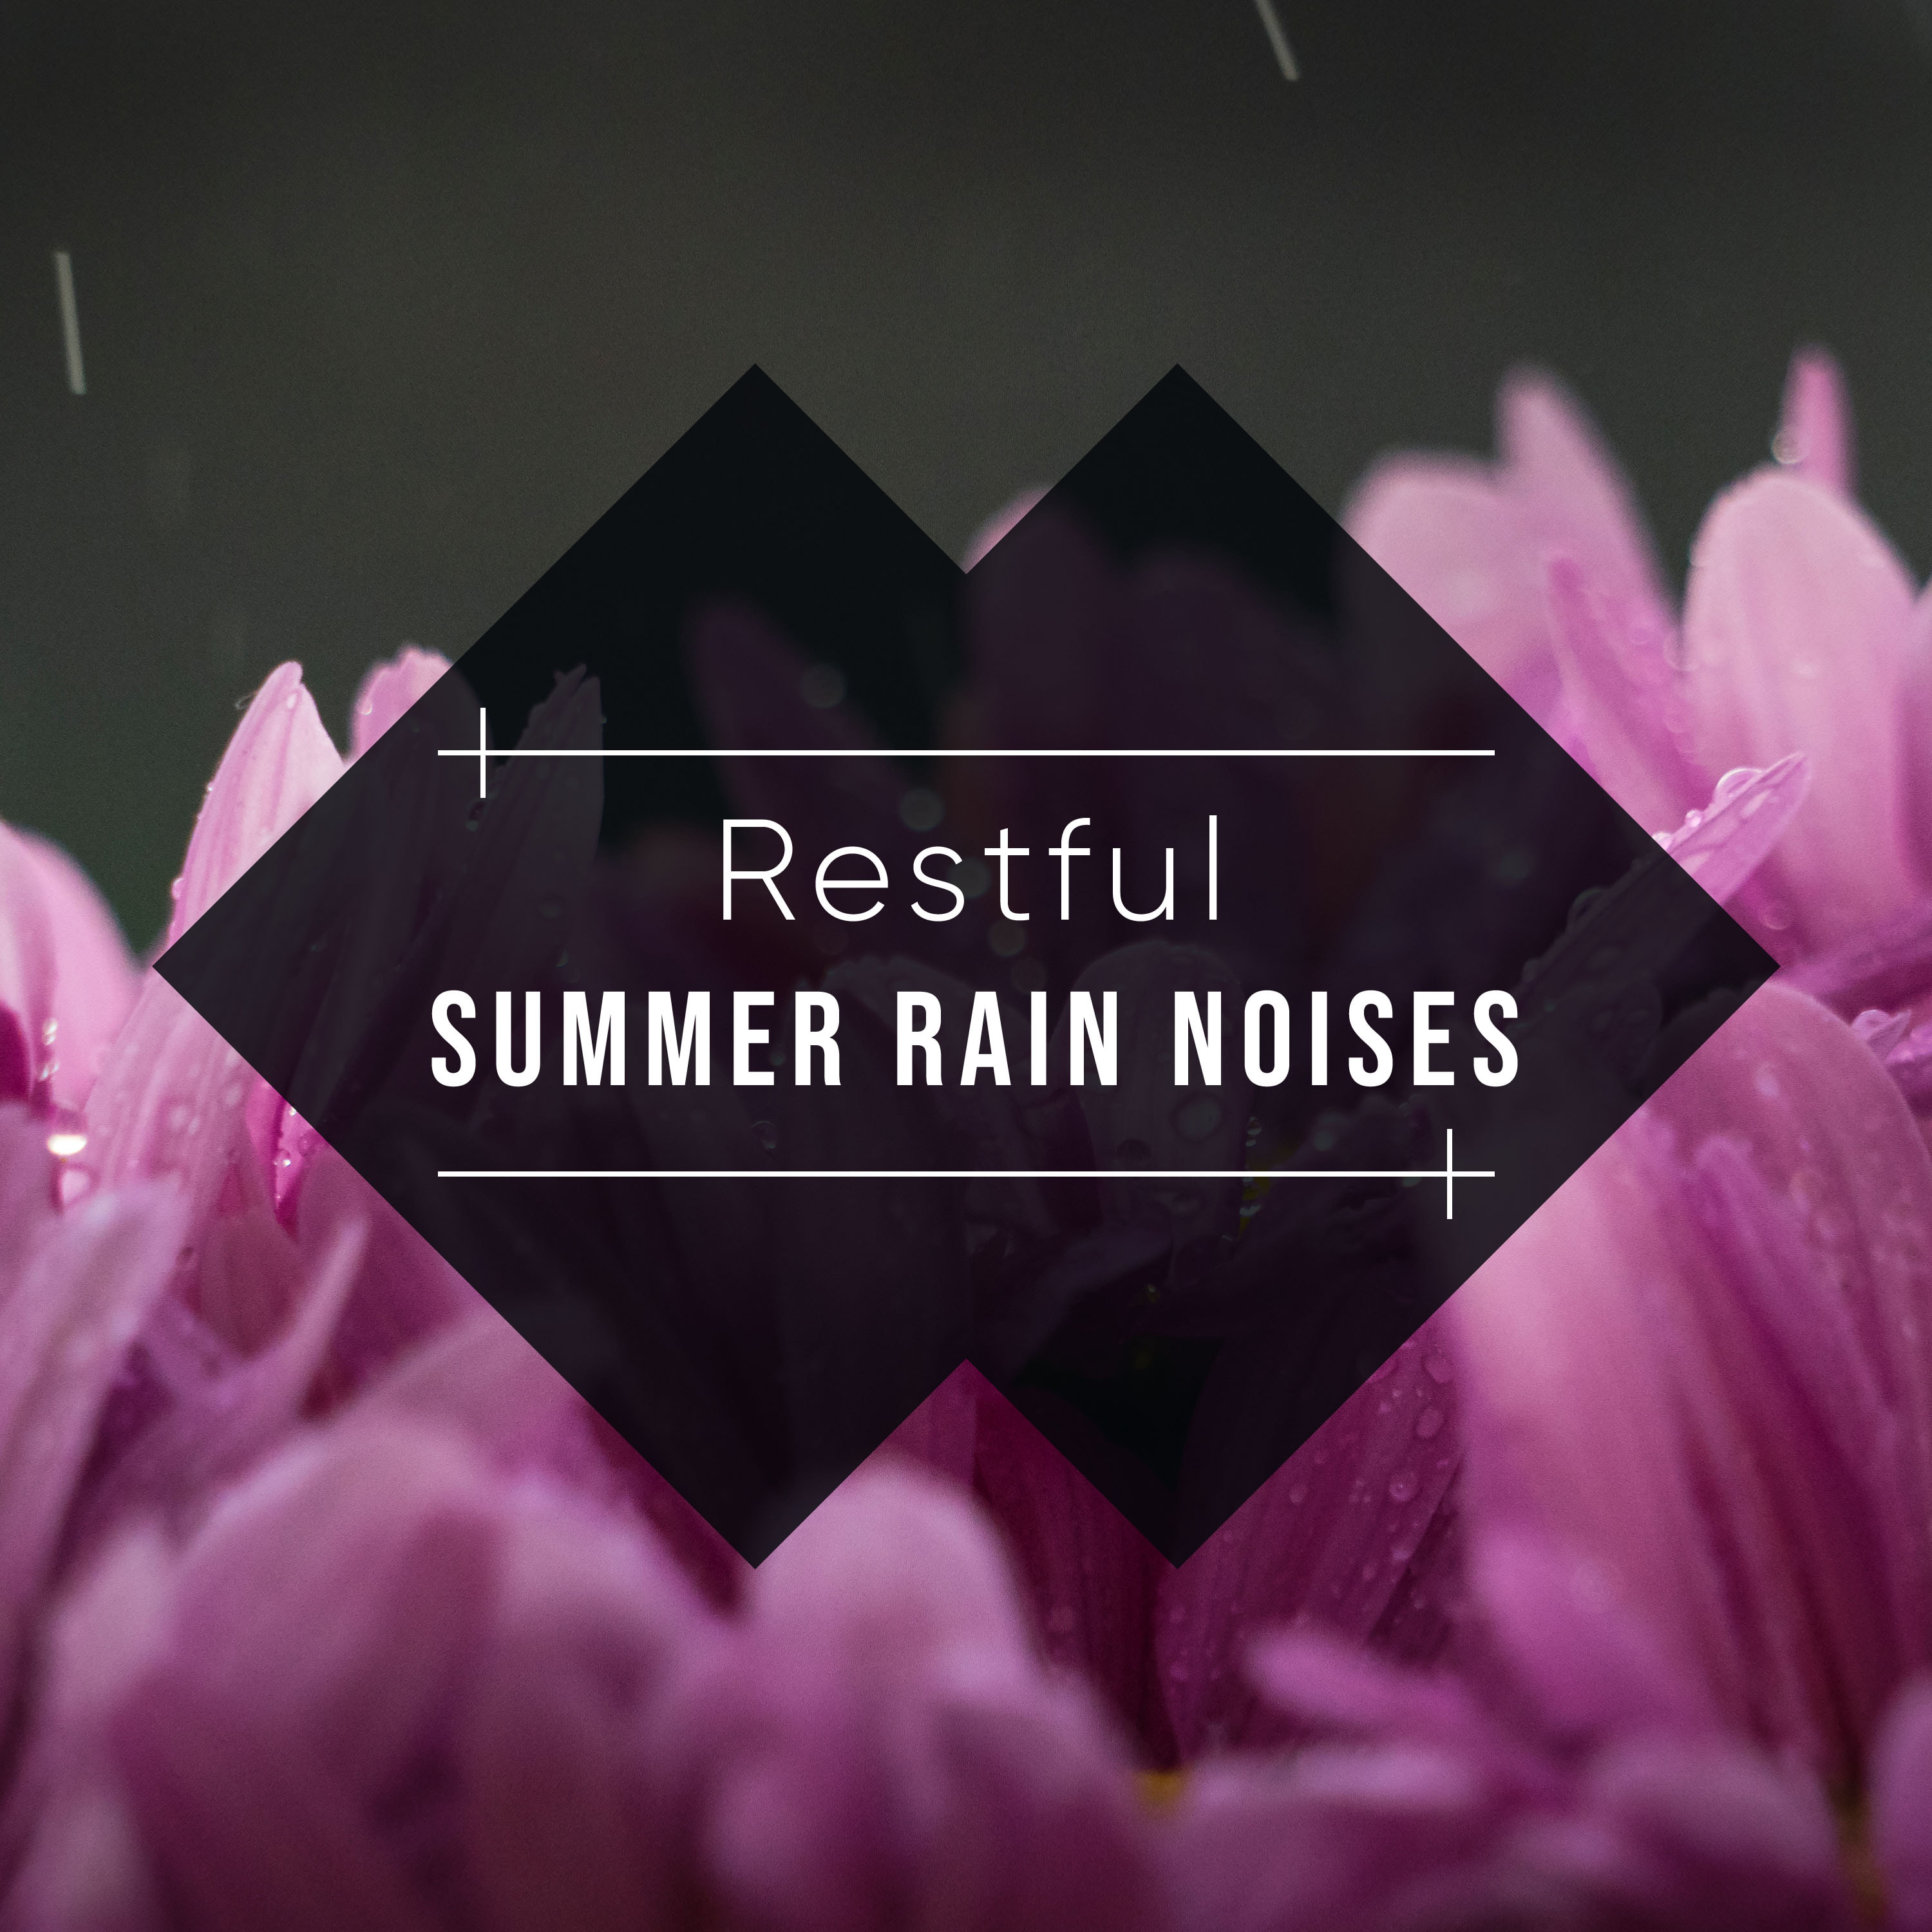 #10 Restful Summer Rain Noises from Nature